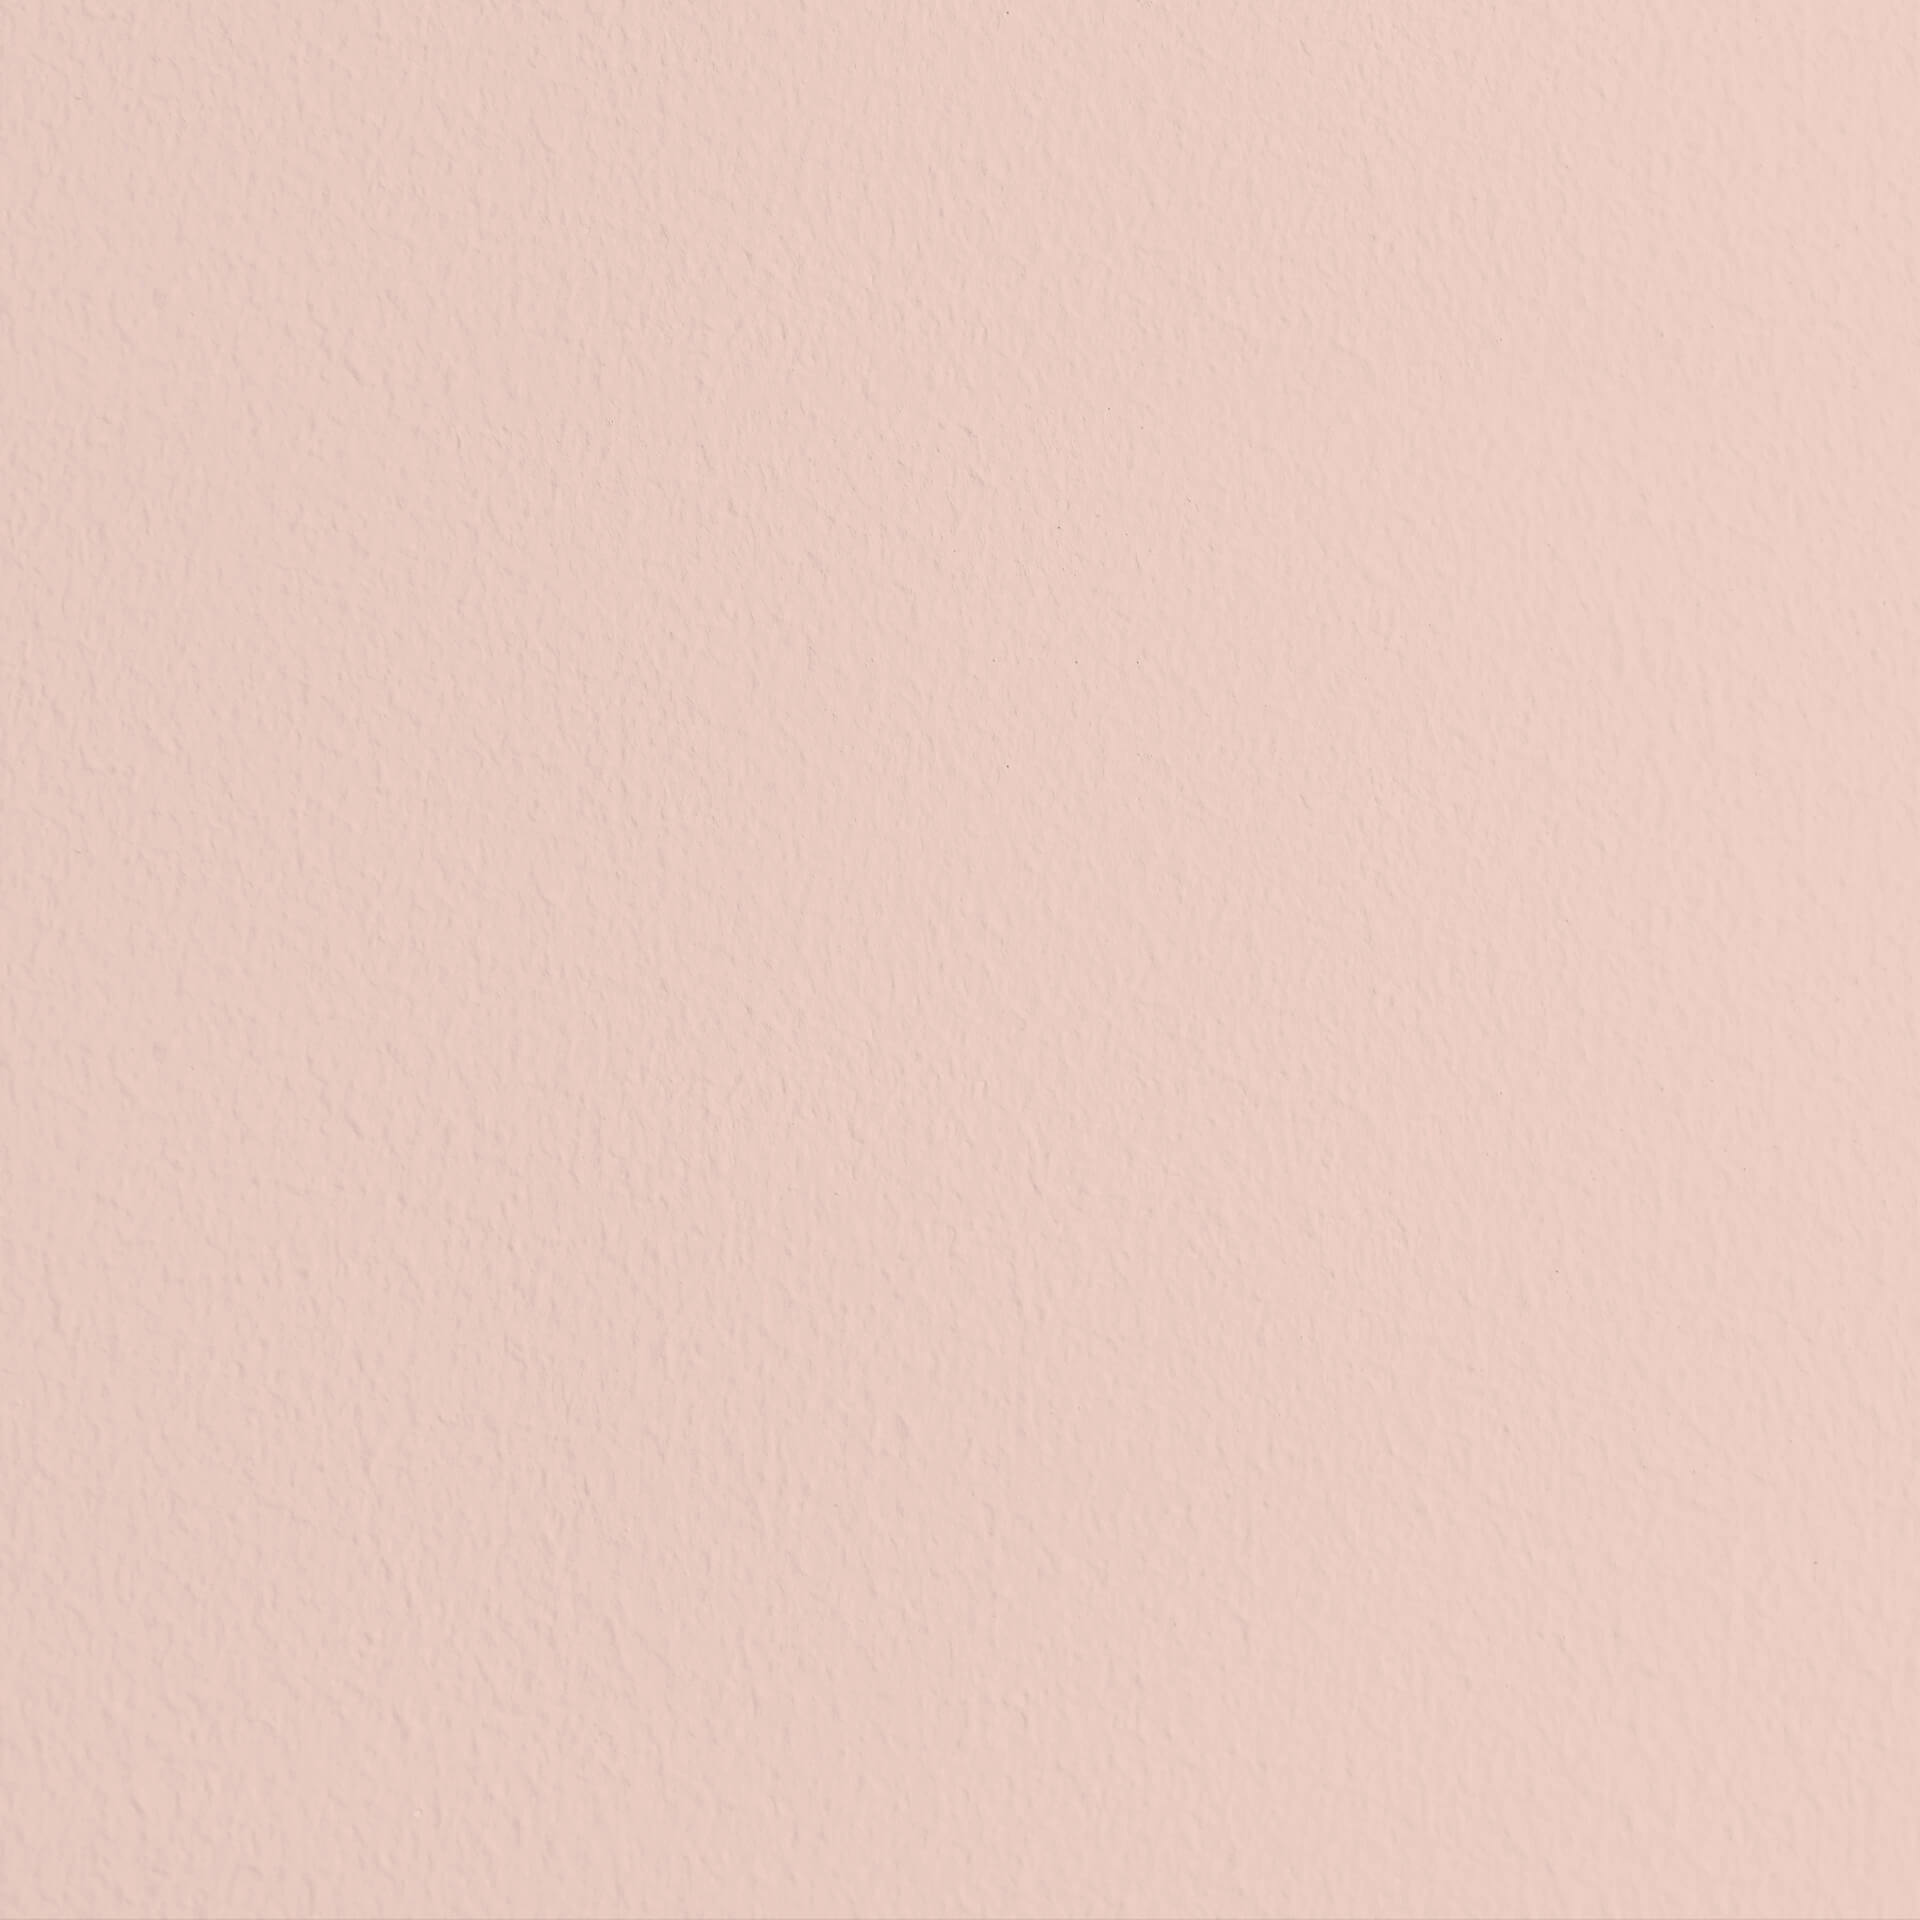 Mylands Gentleman's Pink No. 221 - Marble Matt Emulsion / Wandfarbe, 1L